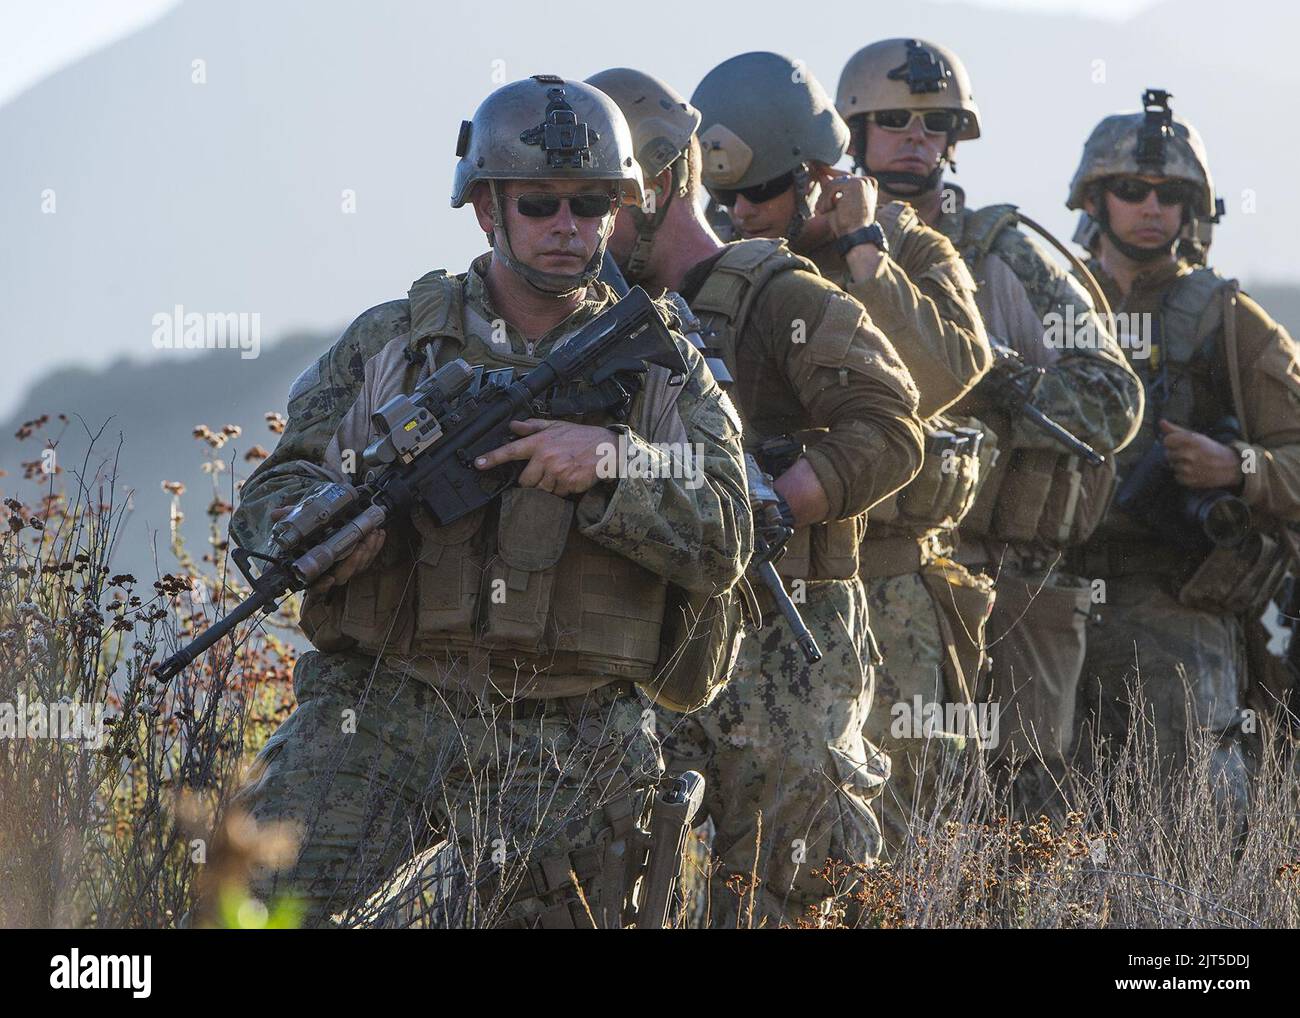 U.S. Service members assigned to various combat camera units patrol Sept 140902 Stock Photo